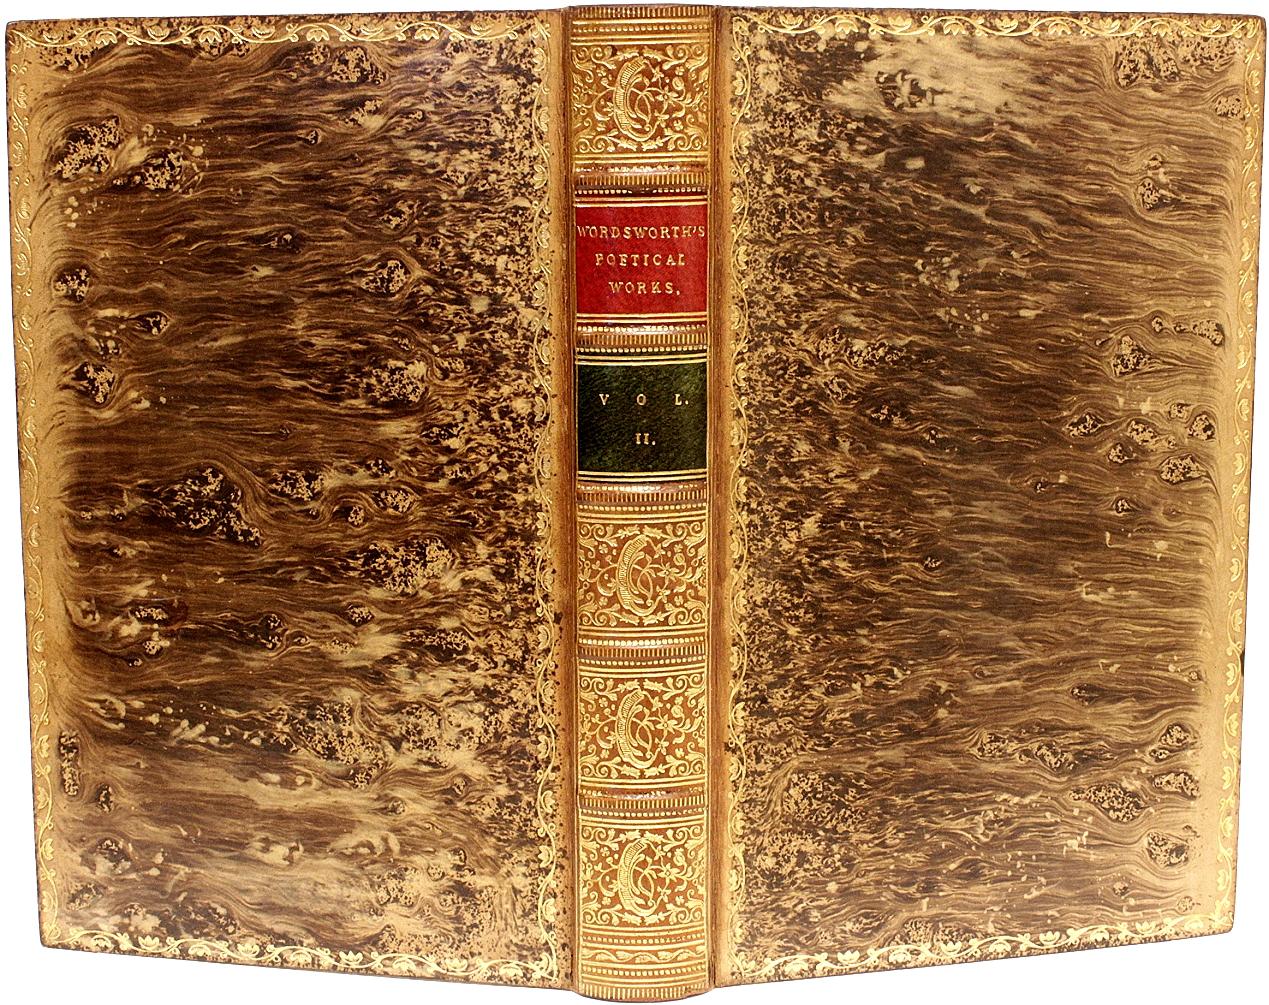 British The Poetical Works of William Wordsworth, 8 Vols, Bound in Fine Full Tree Calf